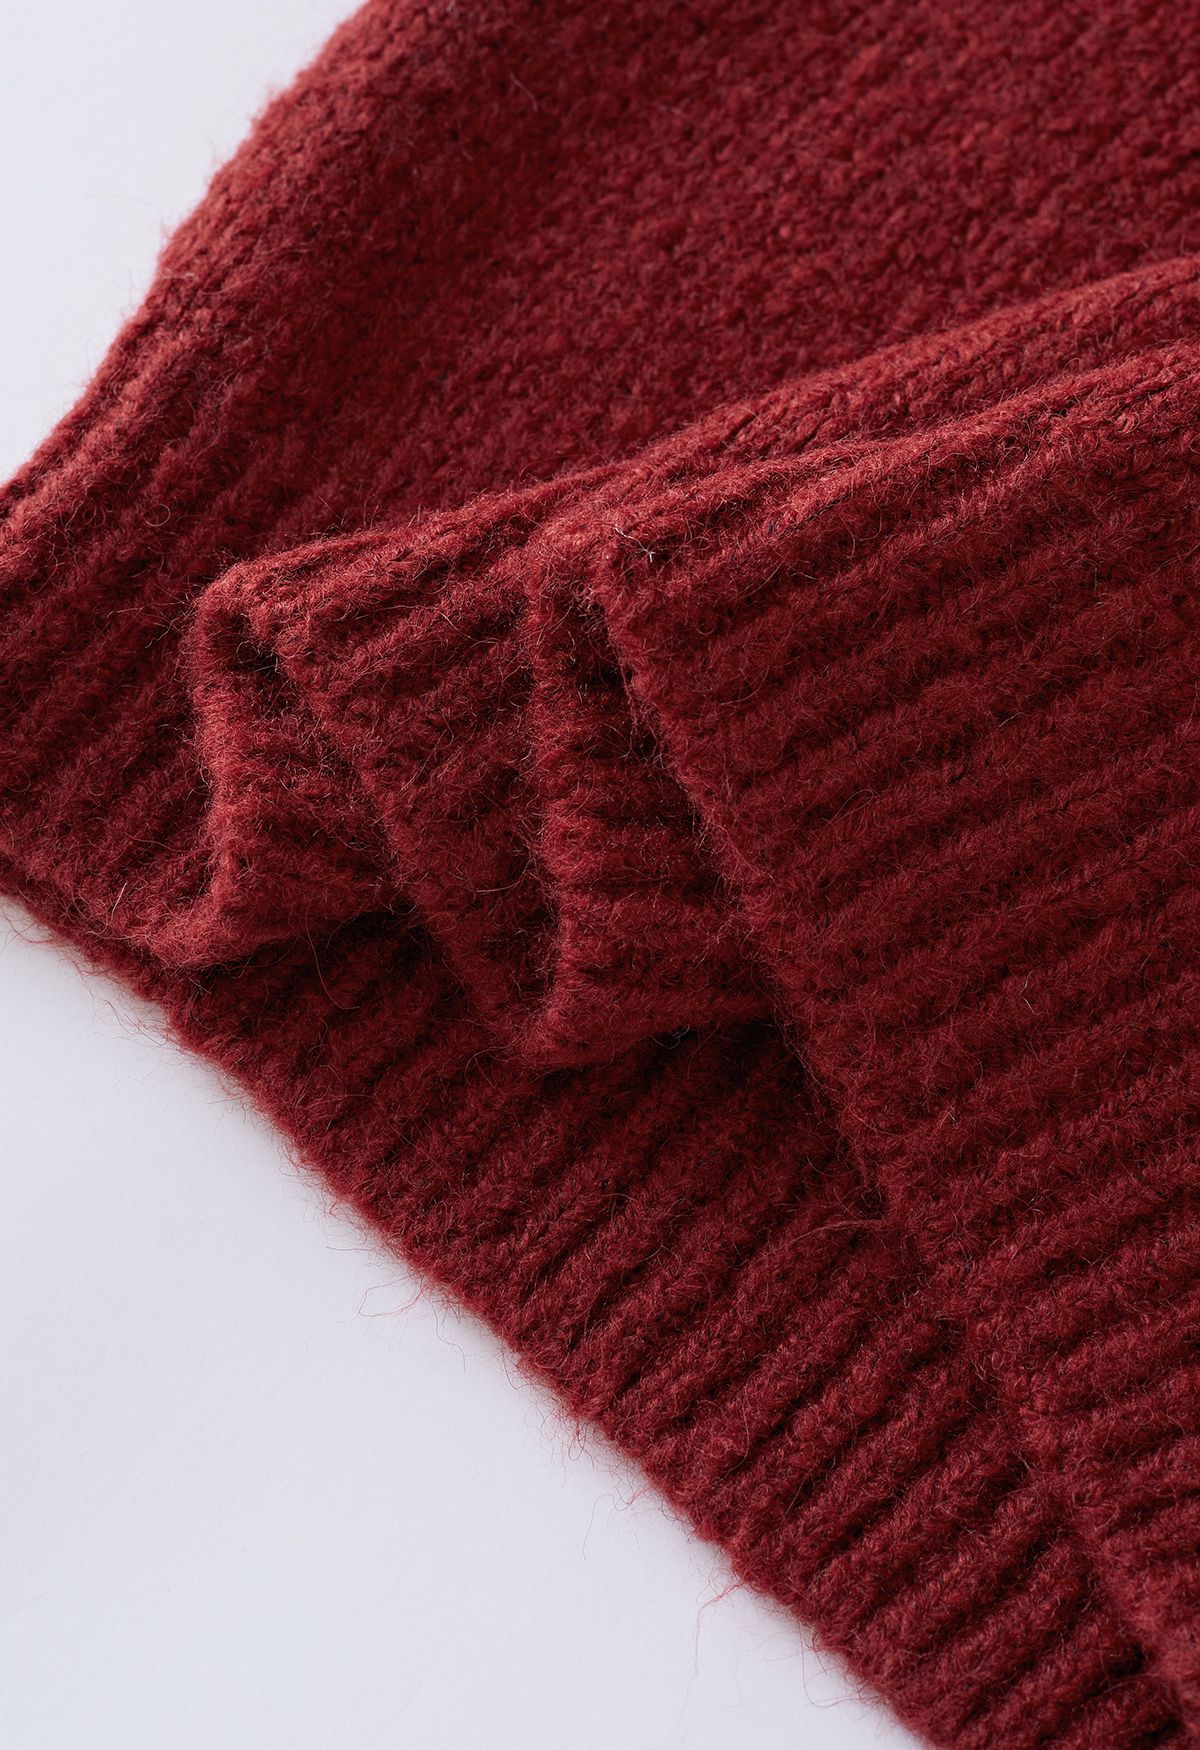 Pom-Pom Christmas Tree Chunky Knit Sweater in Red